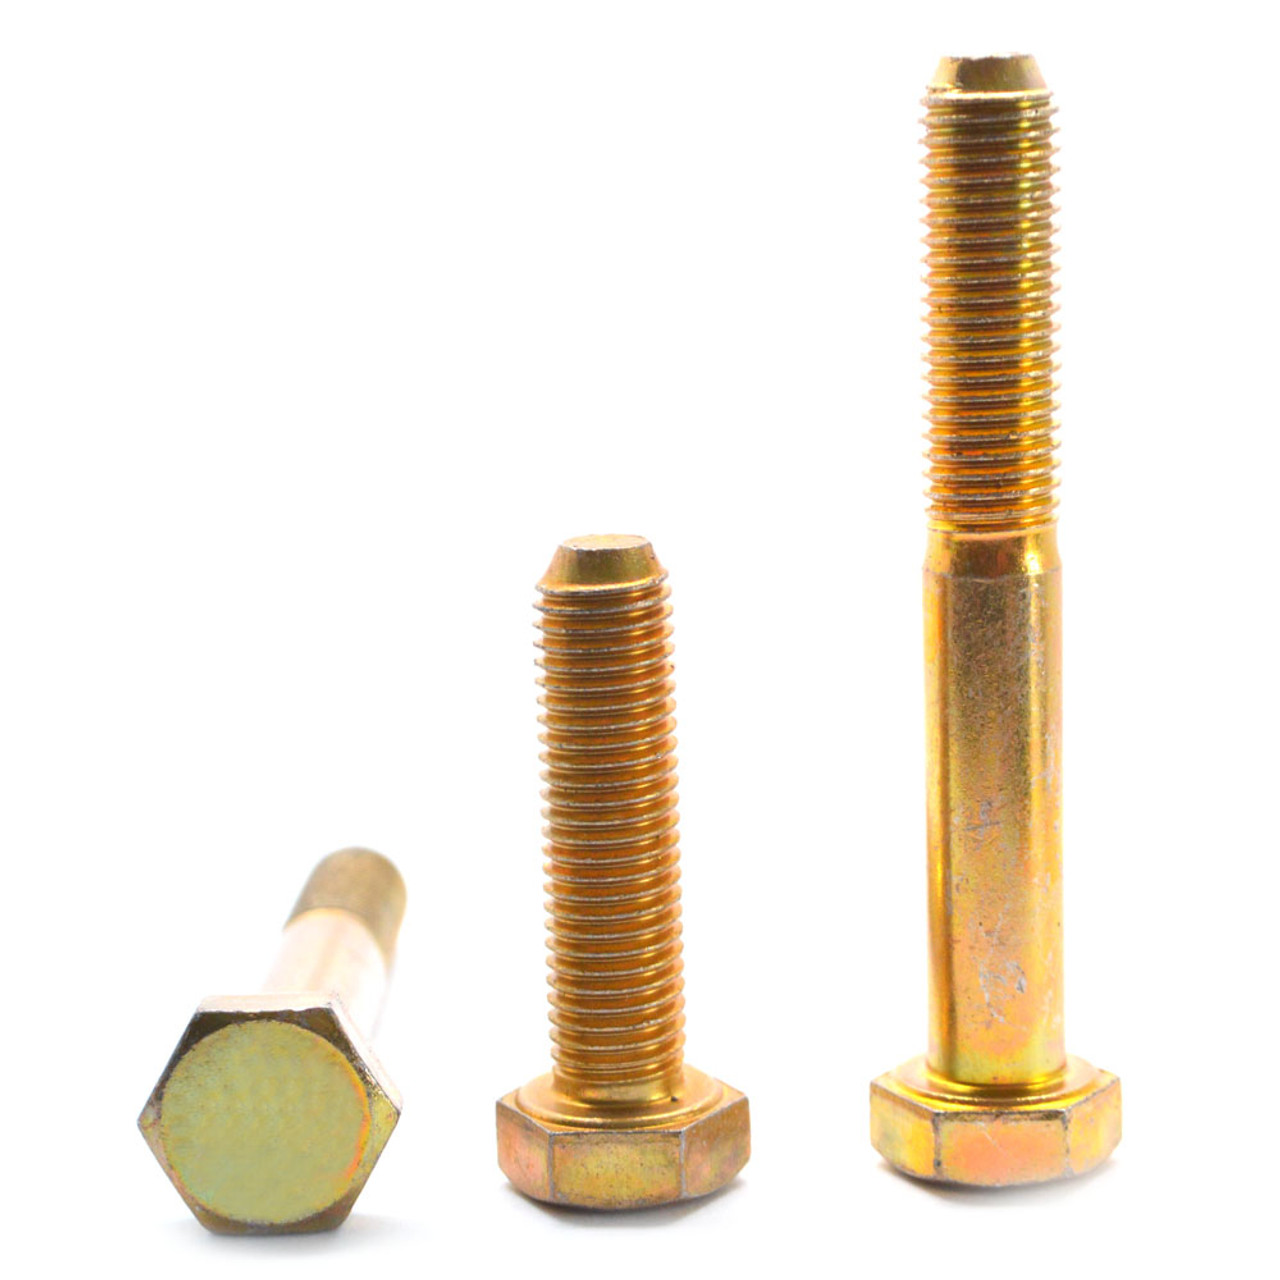 M12 x 1.75 x 180 MM (PT) Coarse Thread DIN 931 Class 10.9 Hex Cap Screw (Bolt) Alloy Steel Yellow Zinc Plated